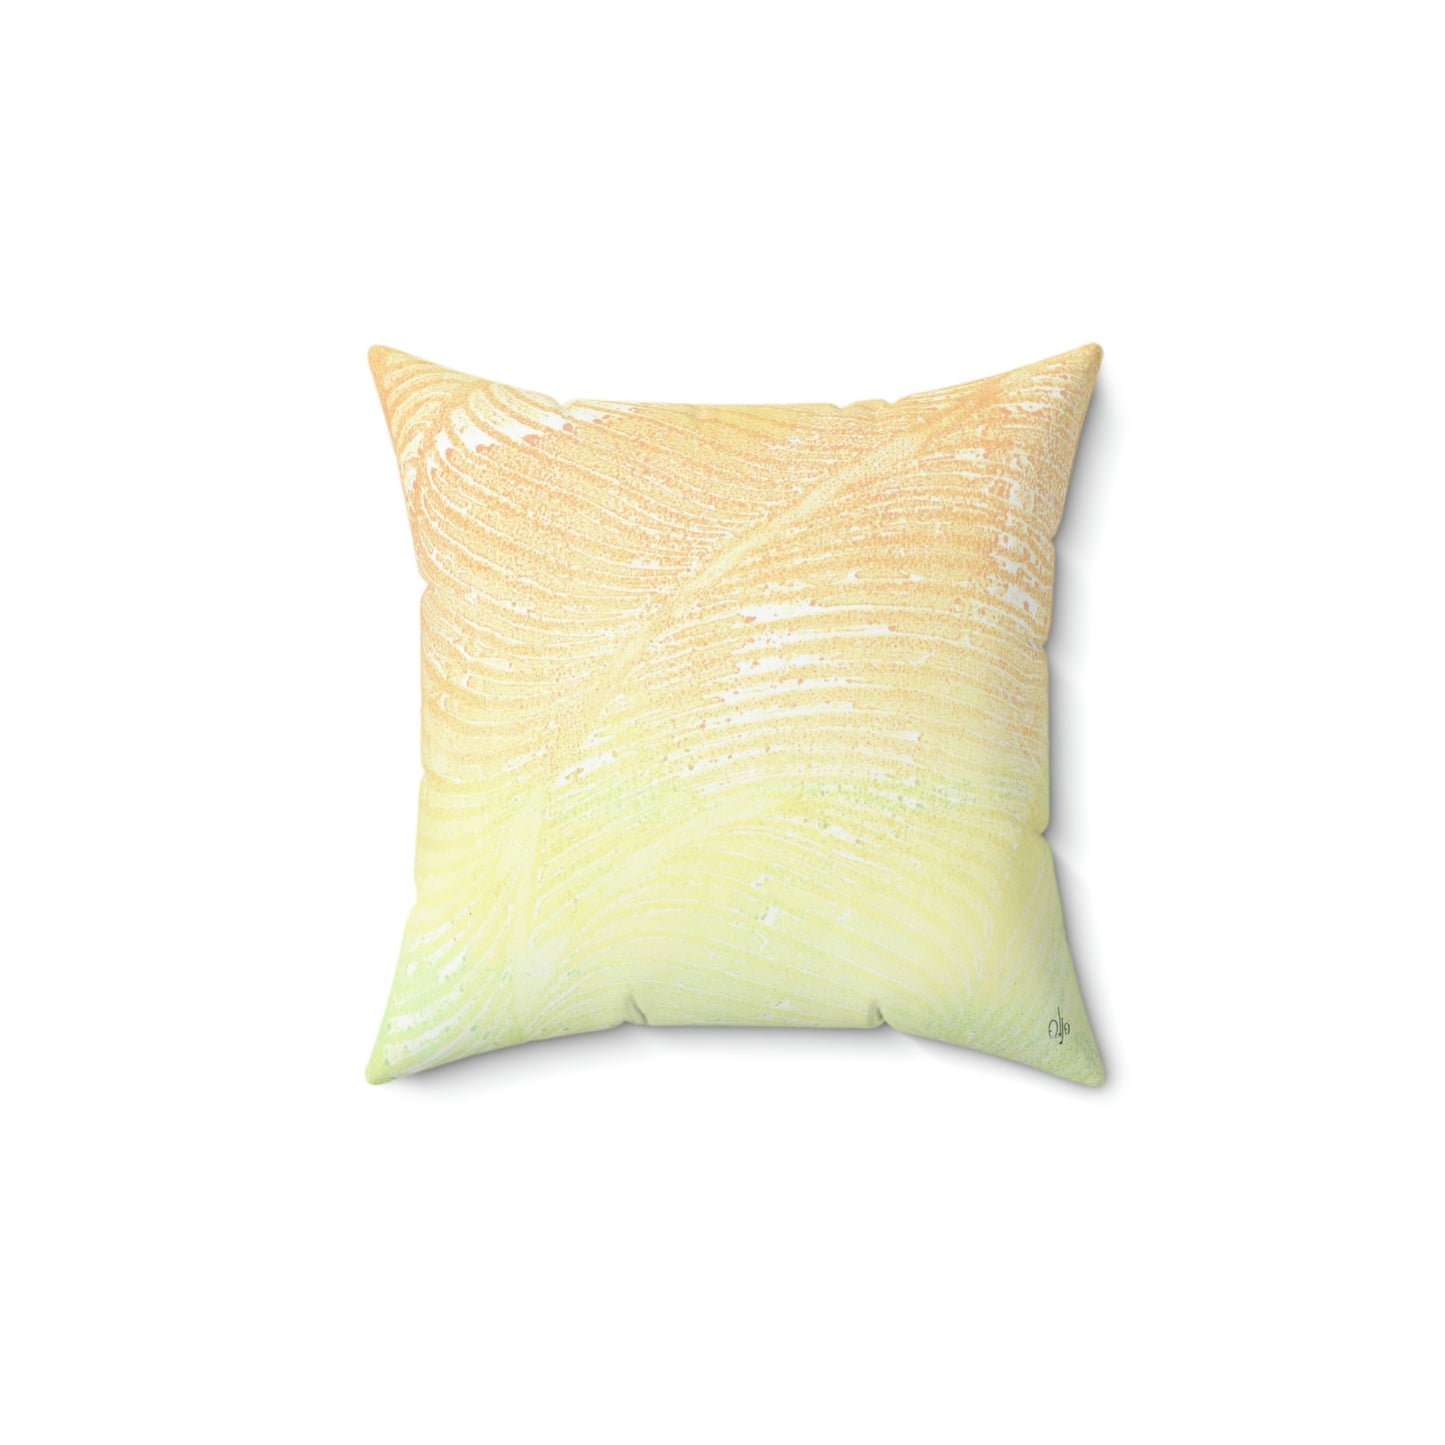 Tropical Waves Square Pillow - Alja Design